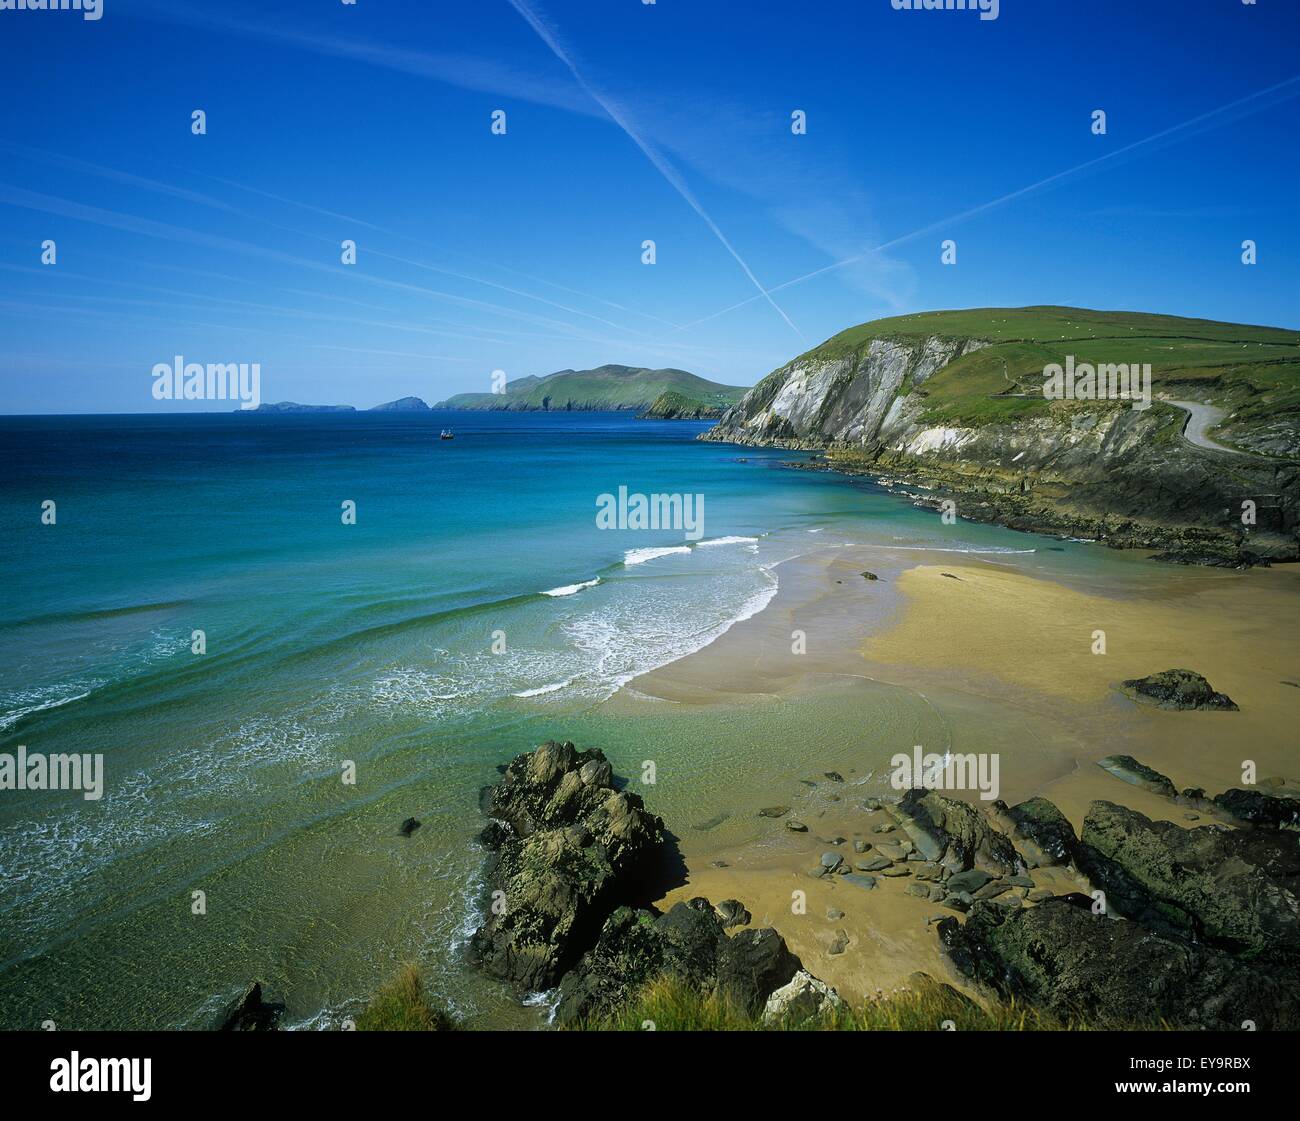 High Angle View Of Rocks On The Beach, Coumeenoole Beach, Slea Head, Dingle Peninsula, County Kerry, Republic Of Ireland Stock Photo